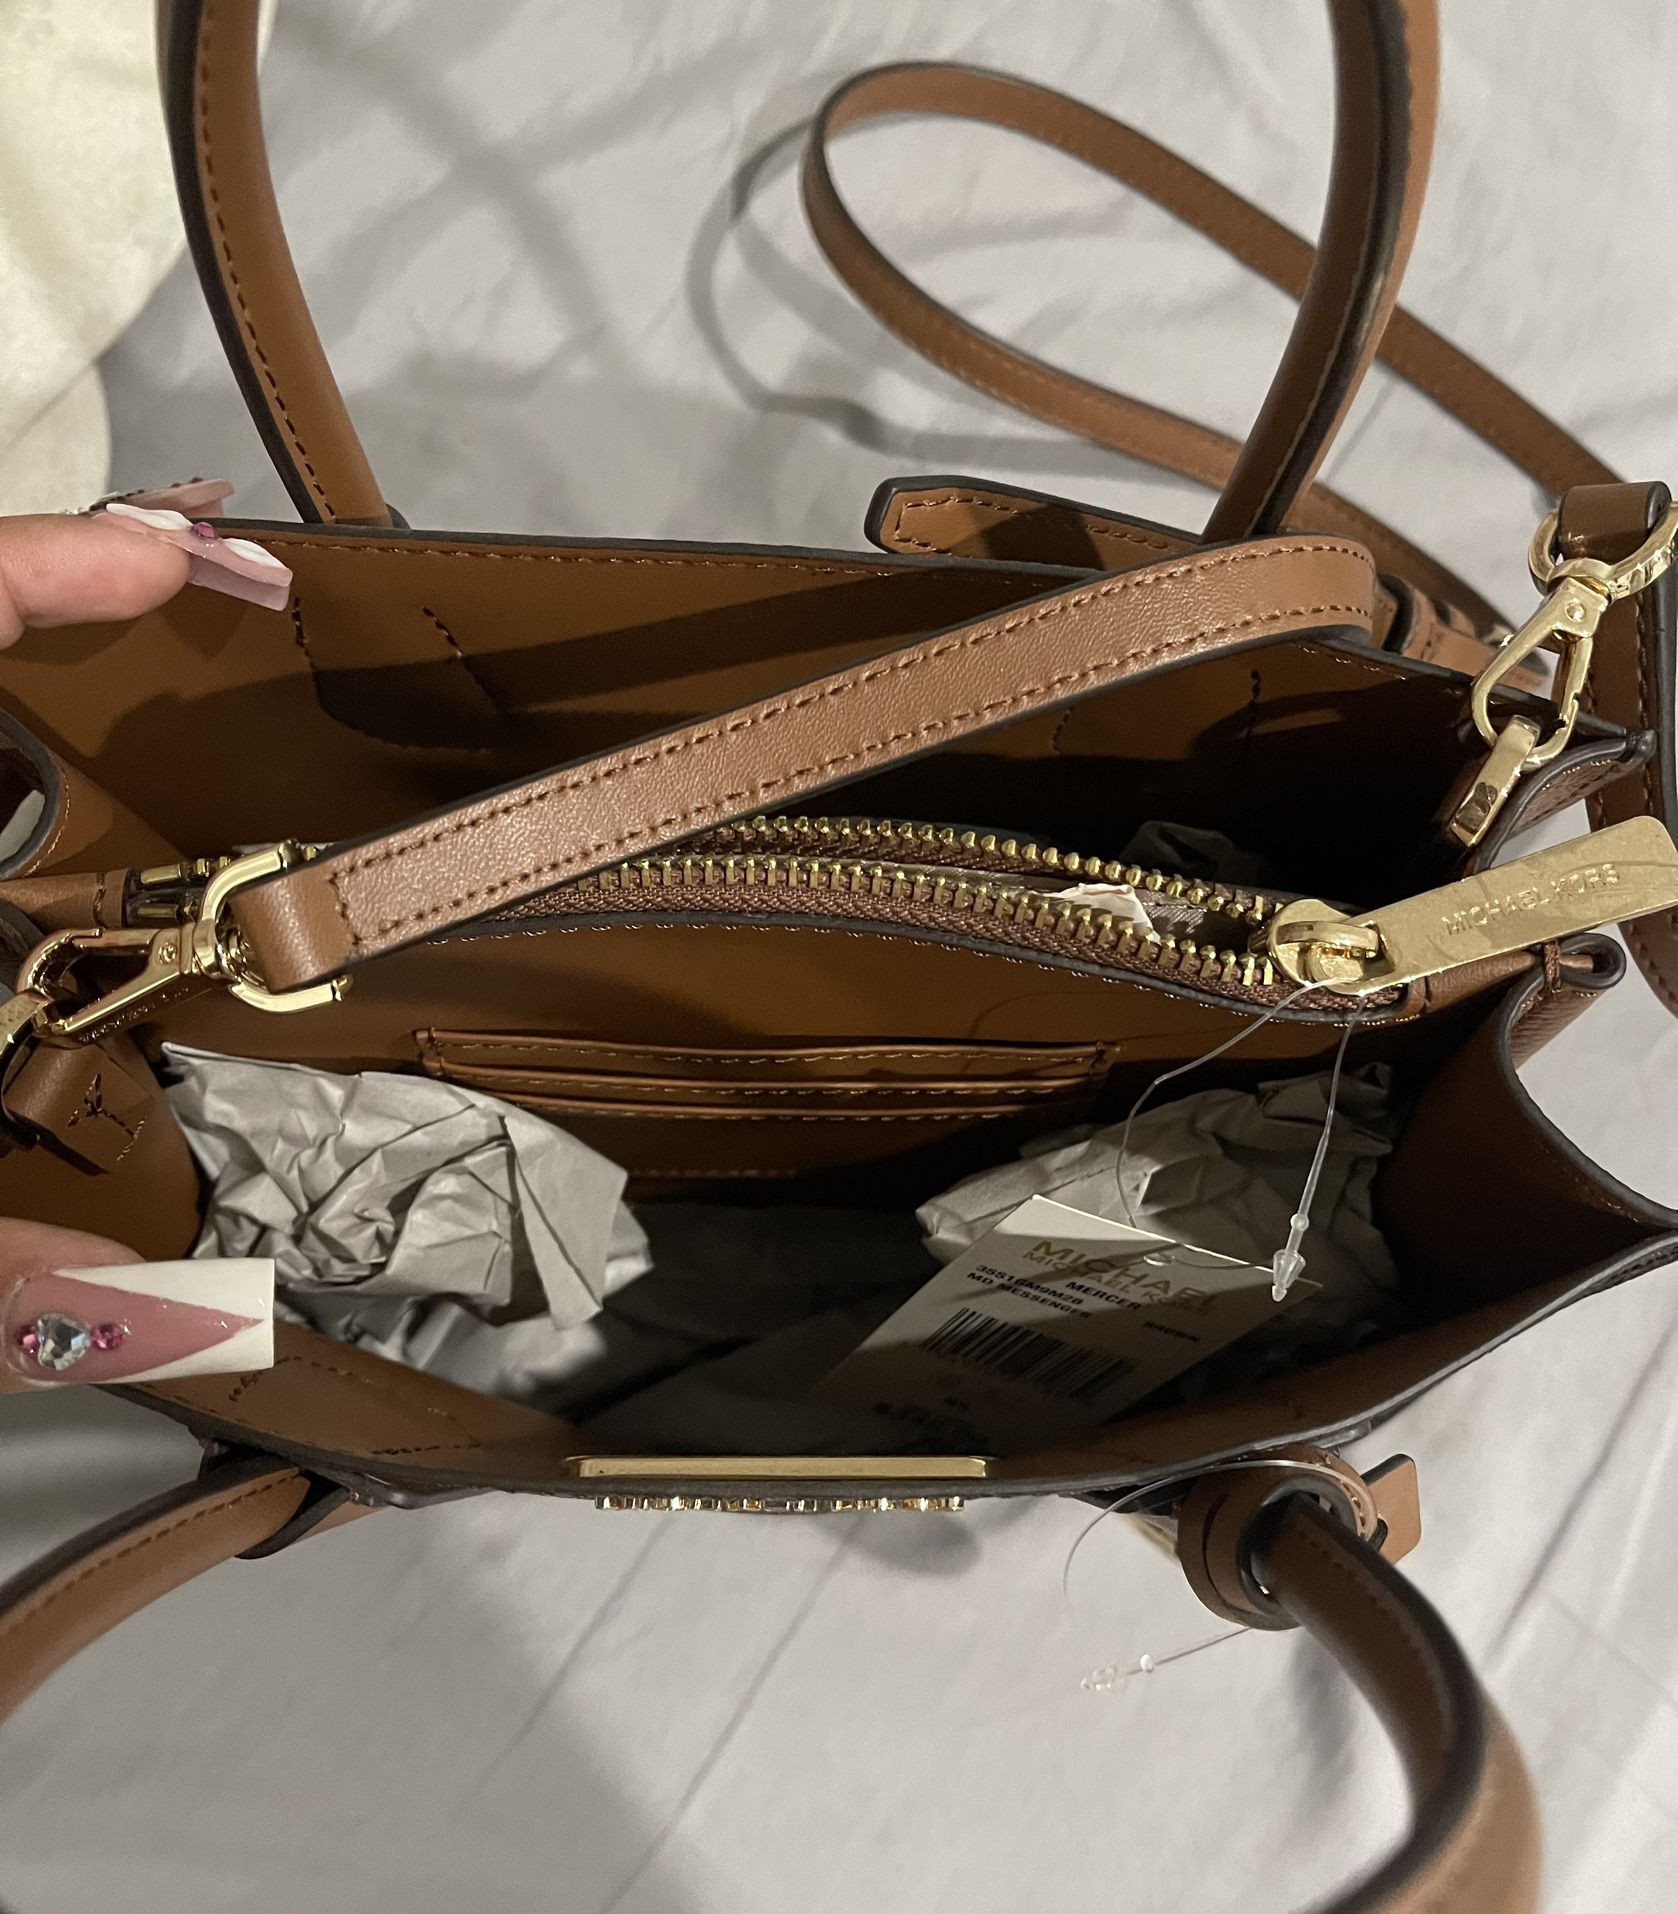 Michael Kors Daniela Large Saffiano Leather Crossbody Bag for Sale in  Seattle, WA - OfferUp